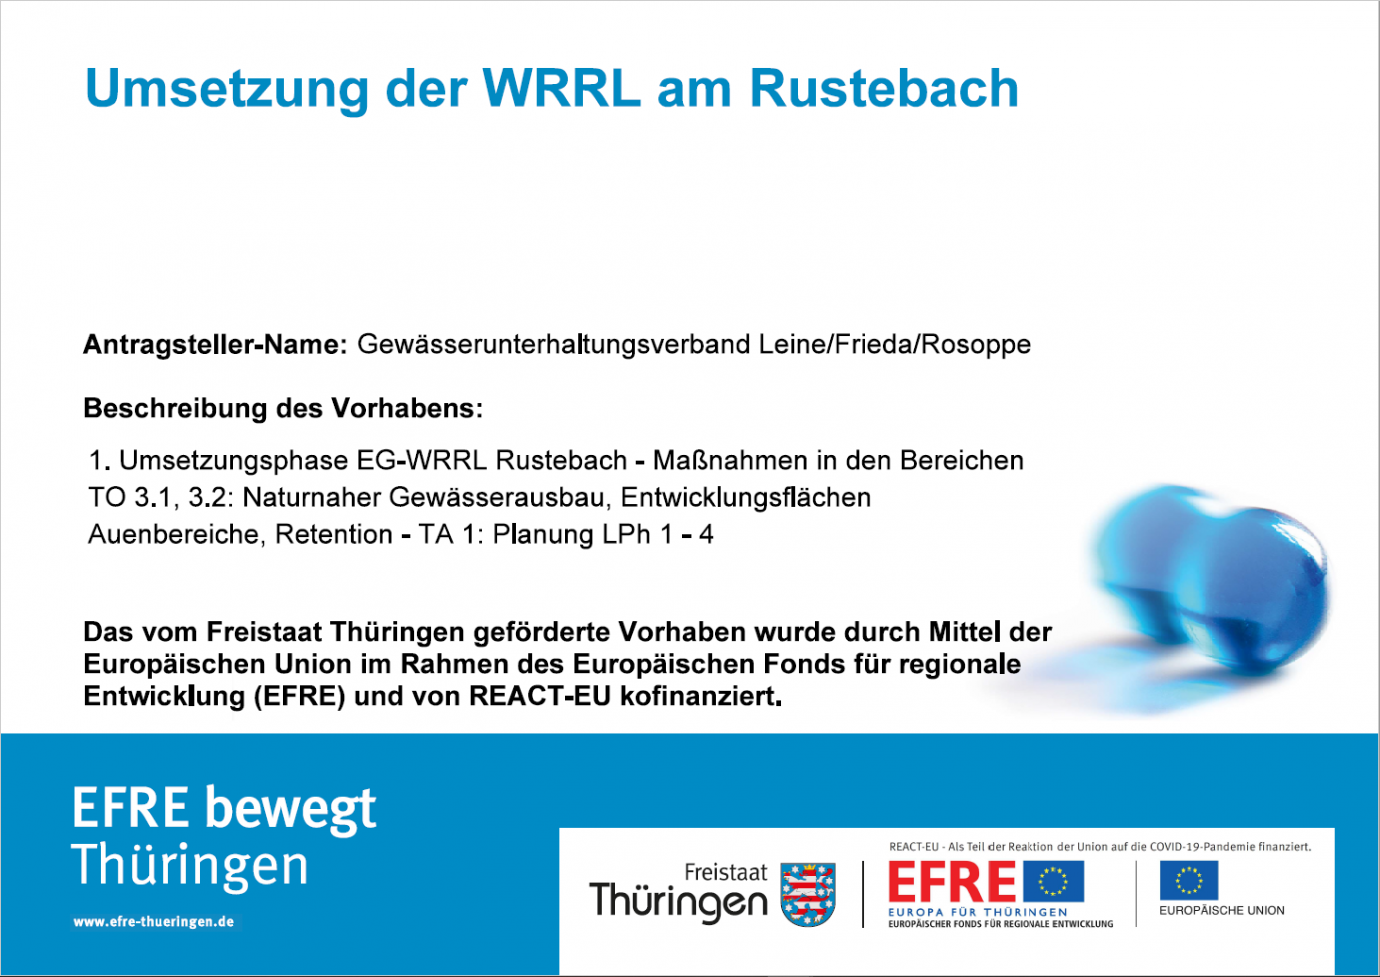 Bildtitel: Umsetzung der WRLL am Rustebach